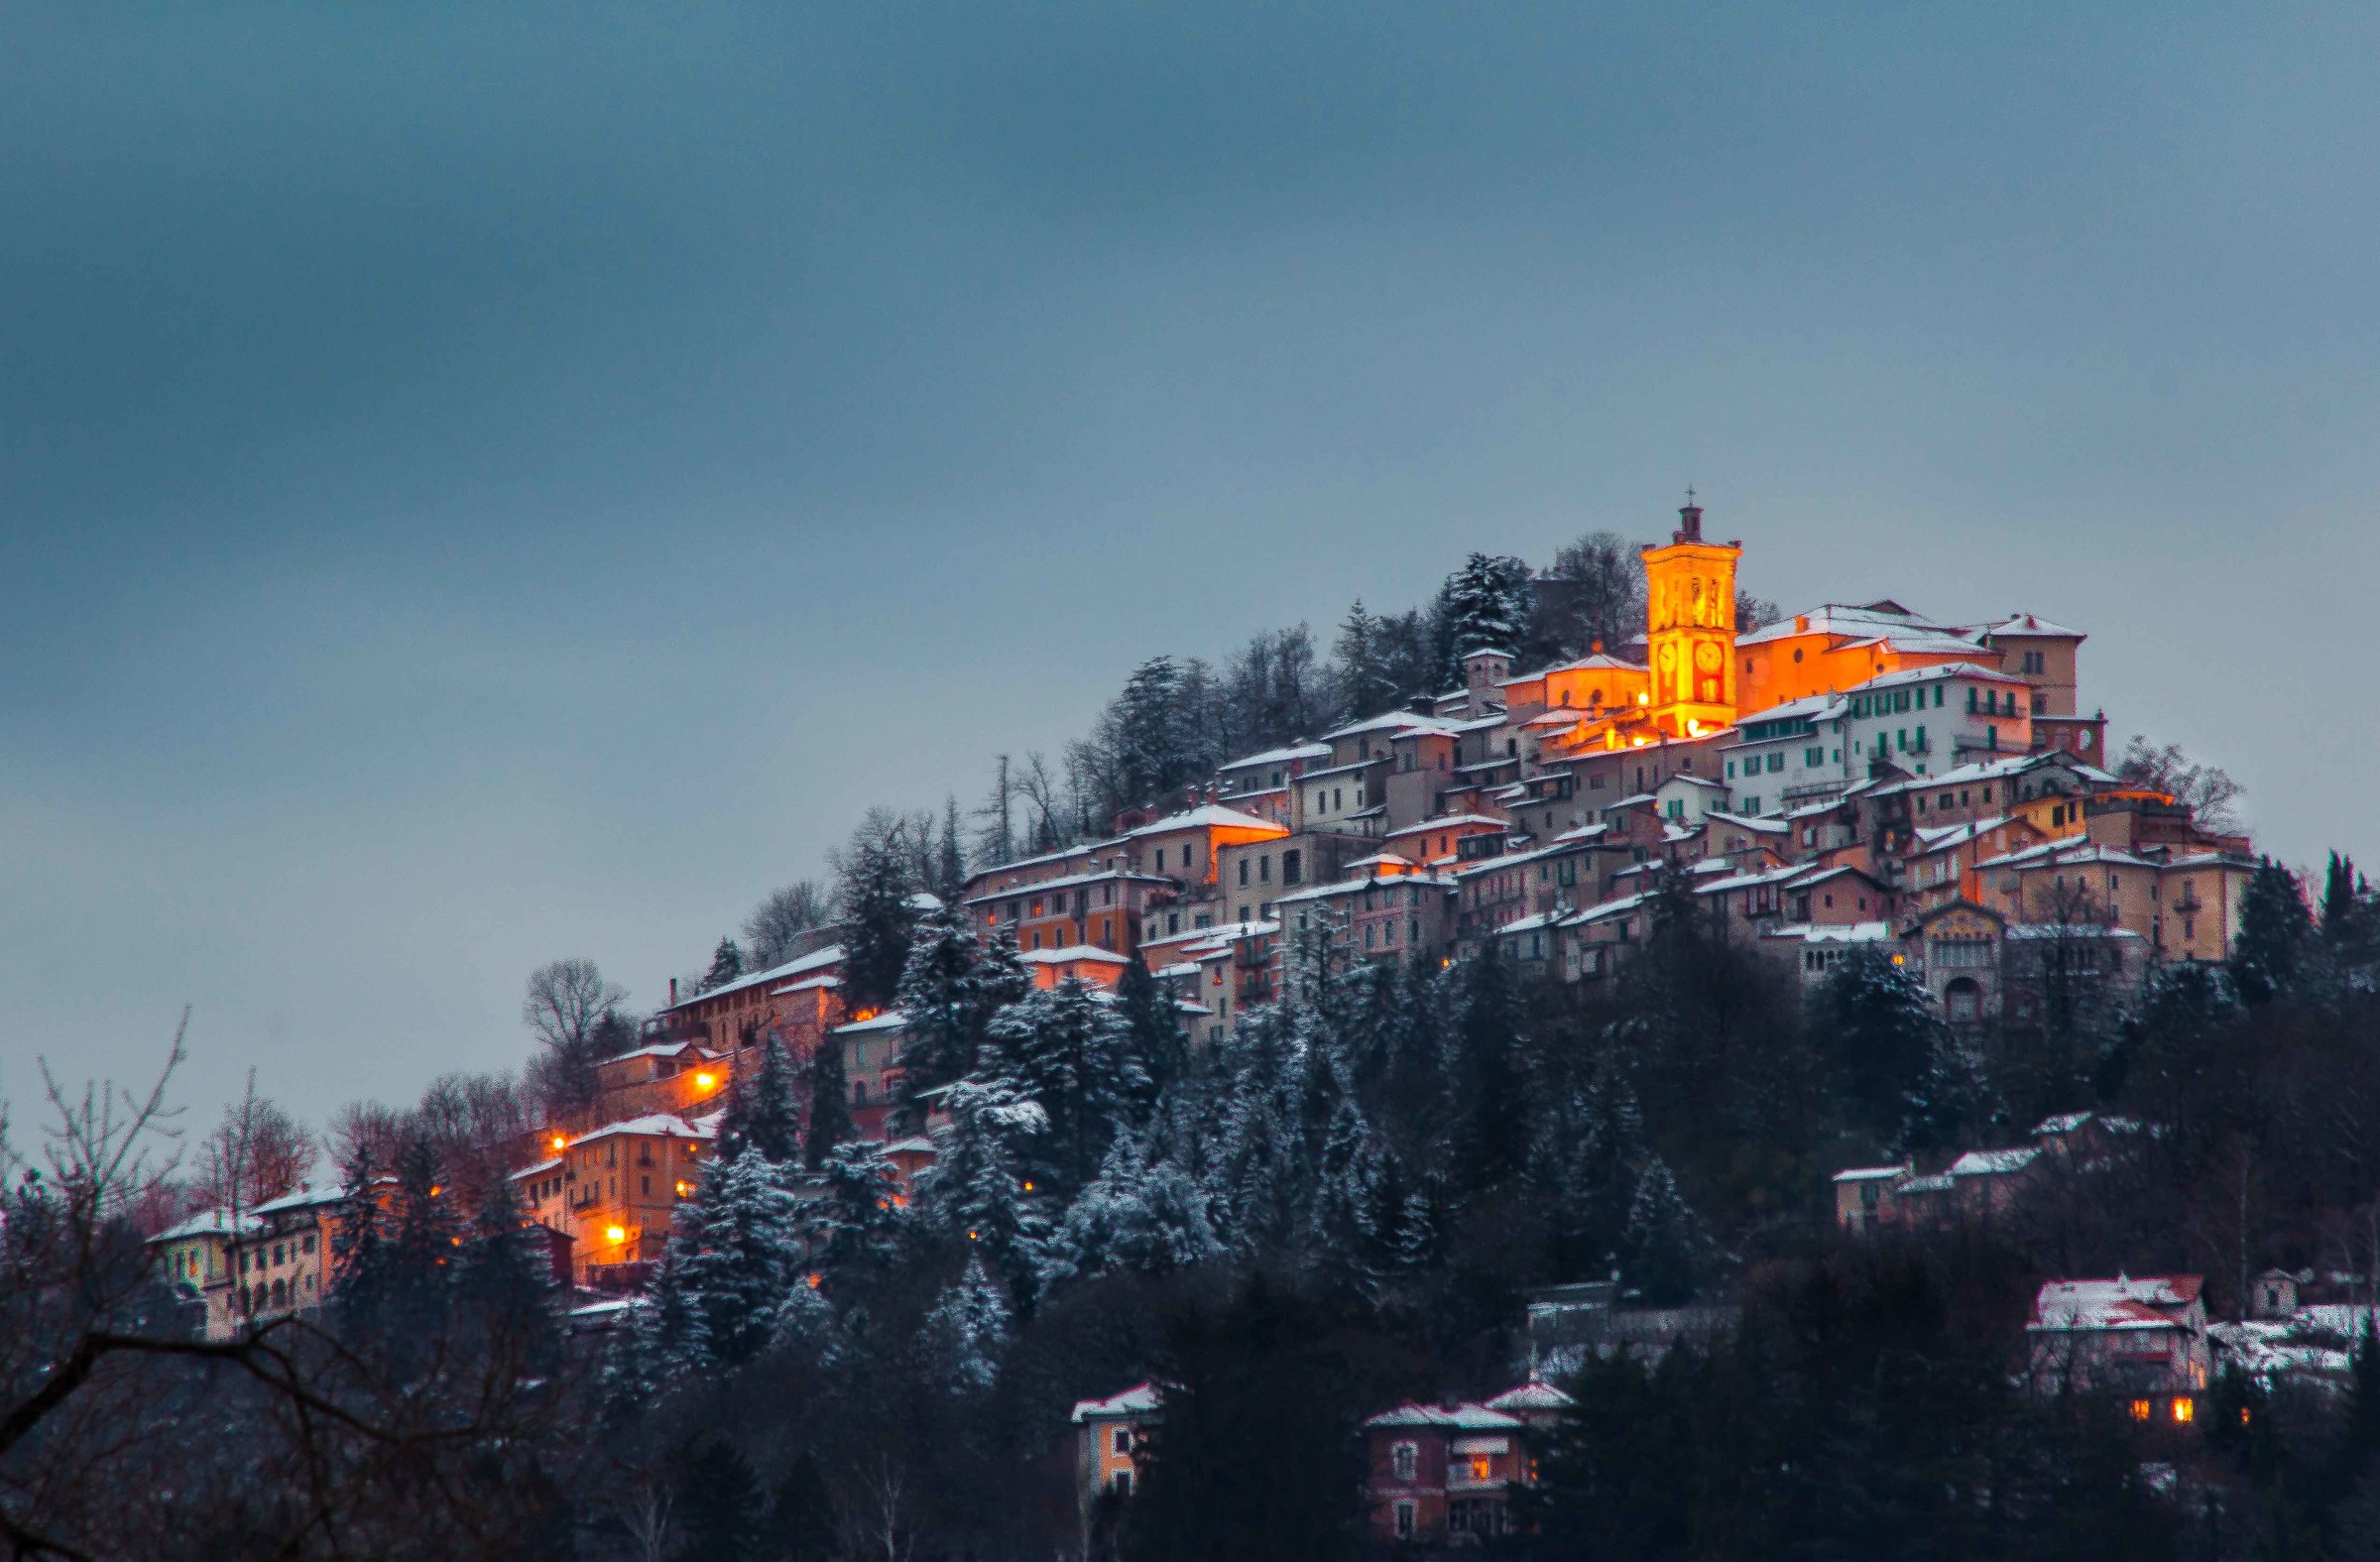 Neve al sacro monte di Varese....